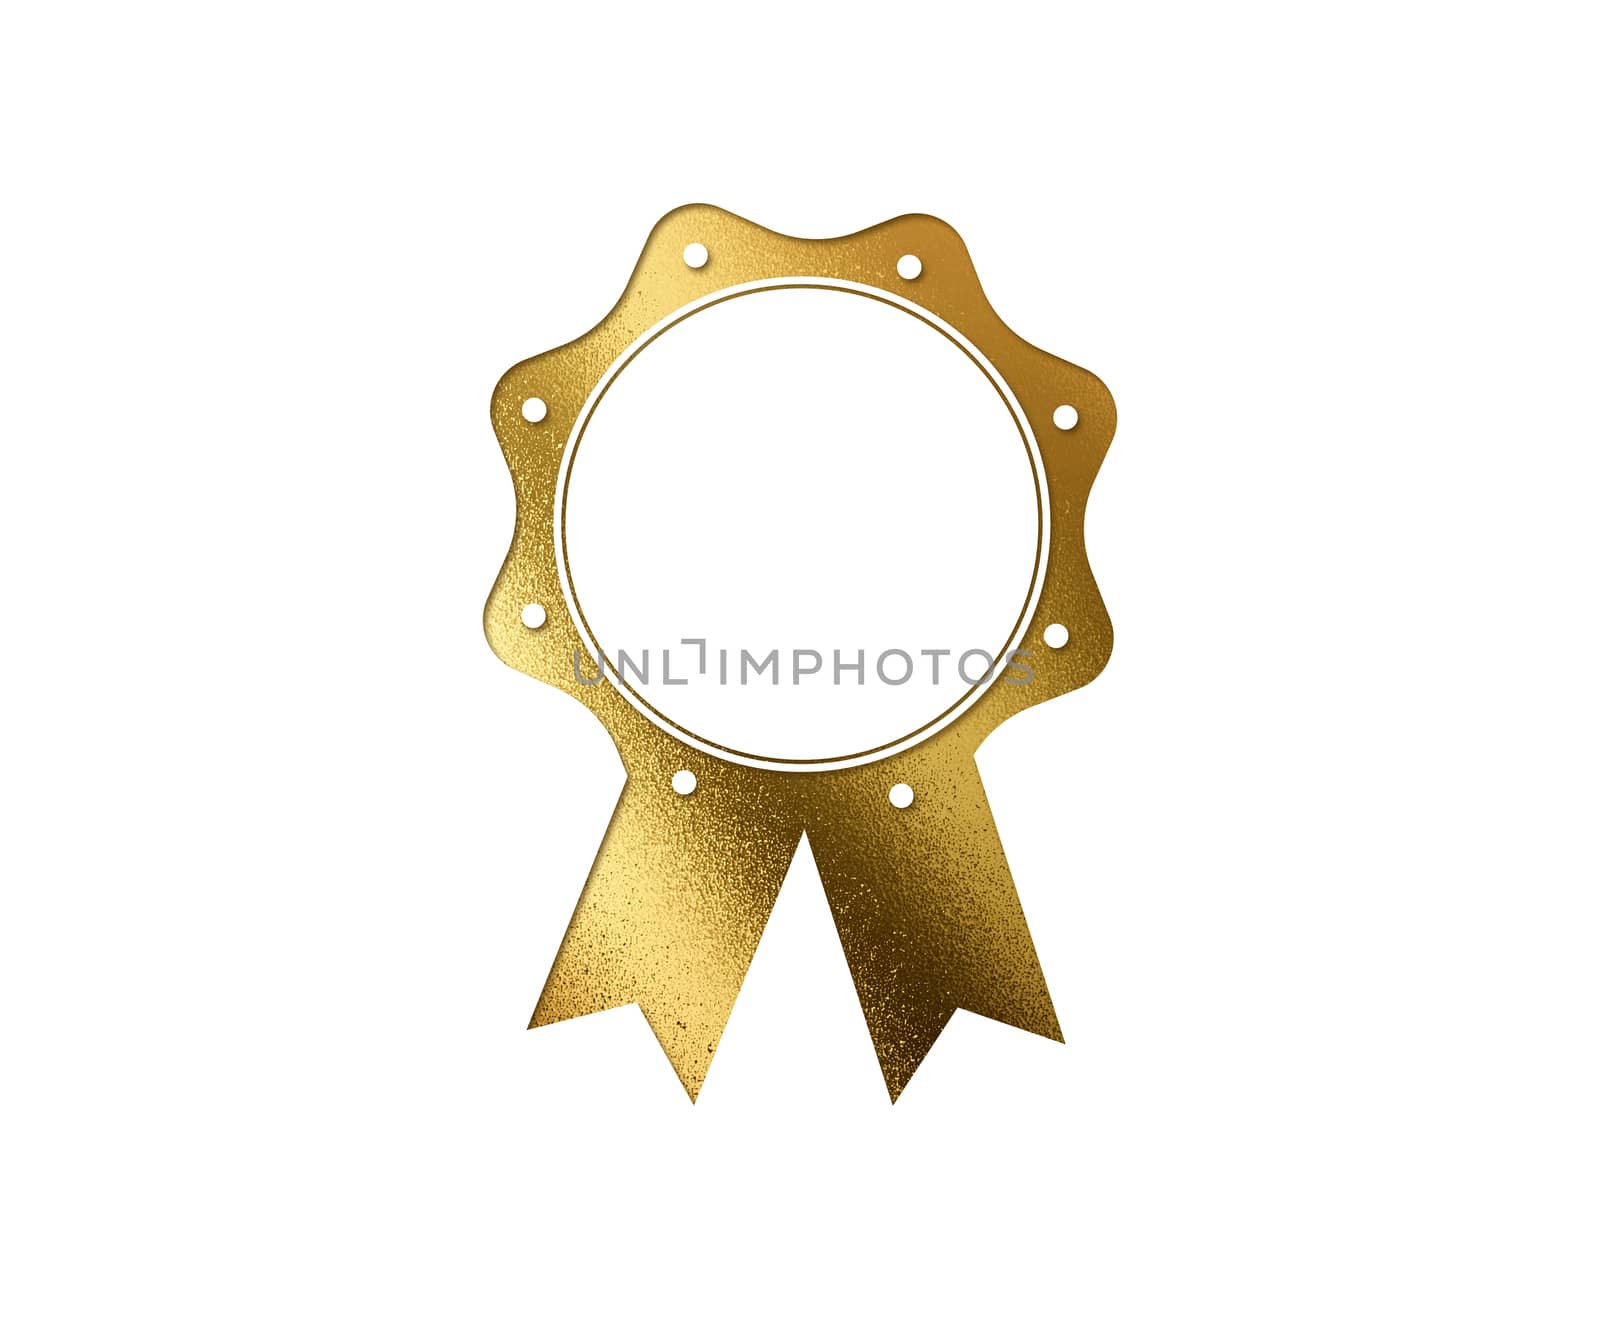 The isolated luxury golden glitter badge flat icon on white background